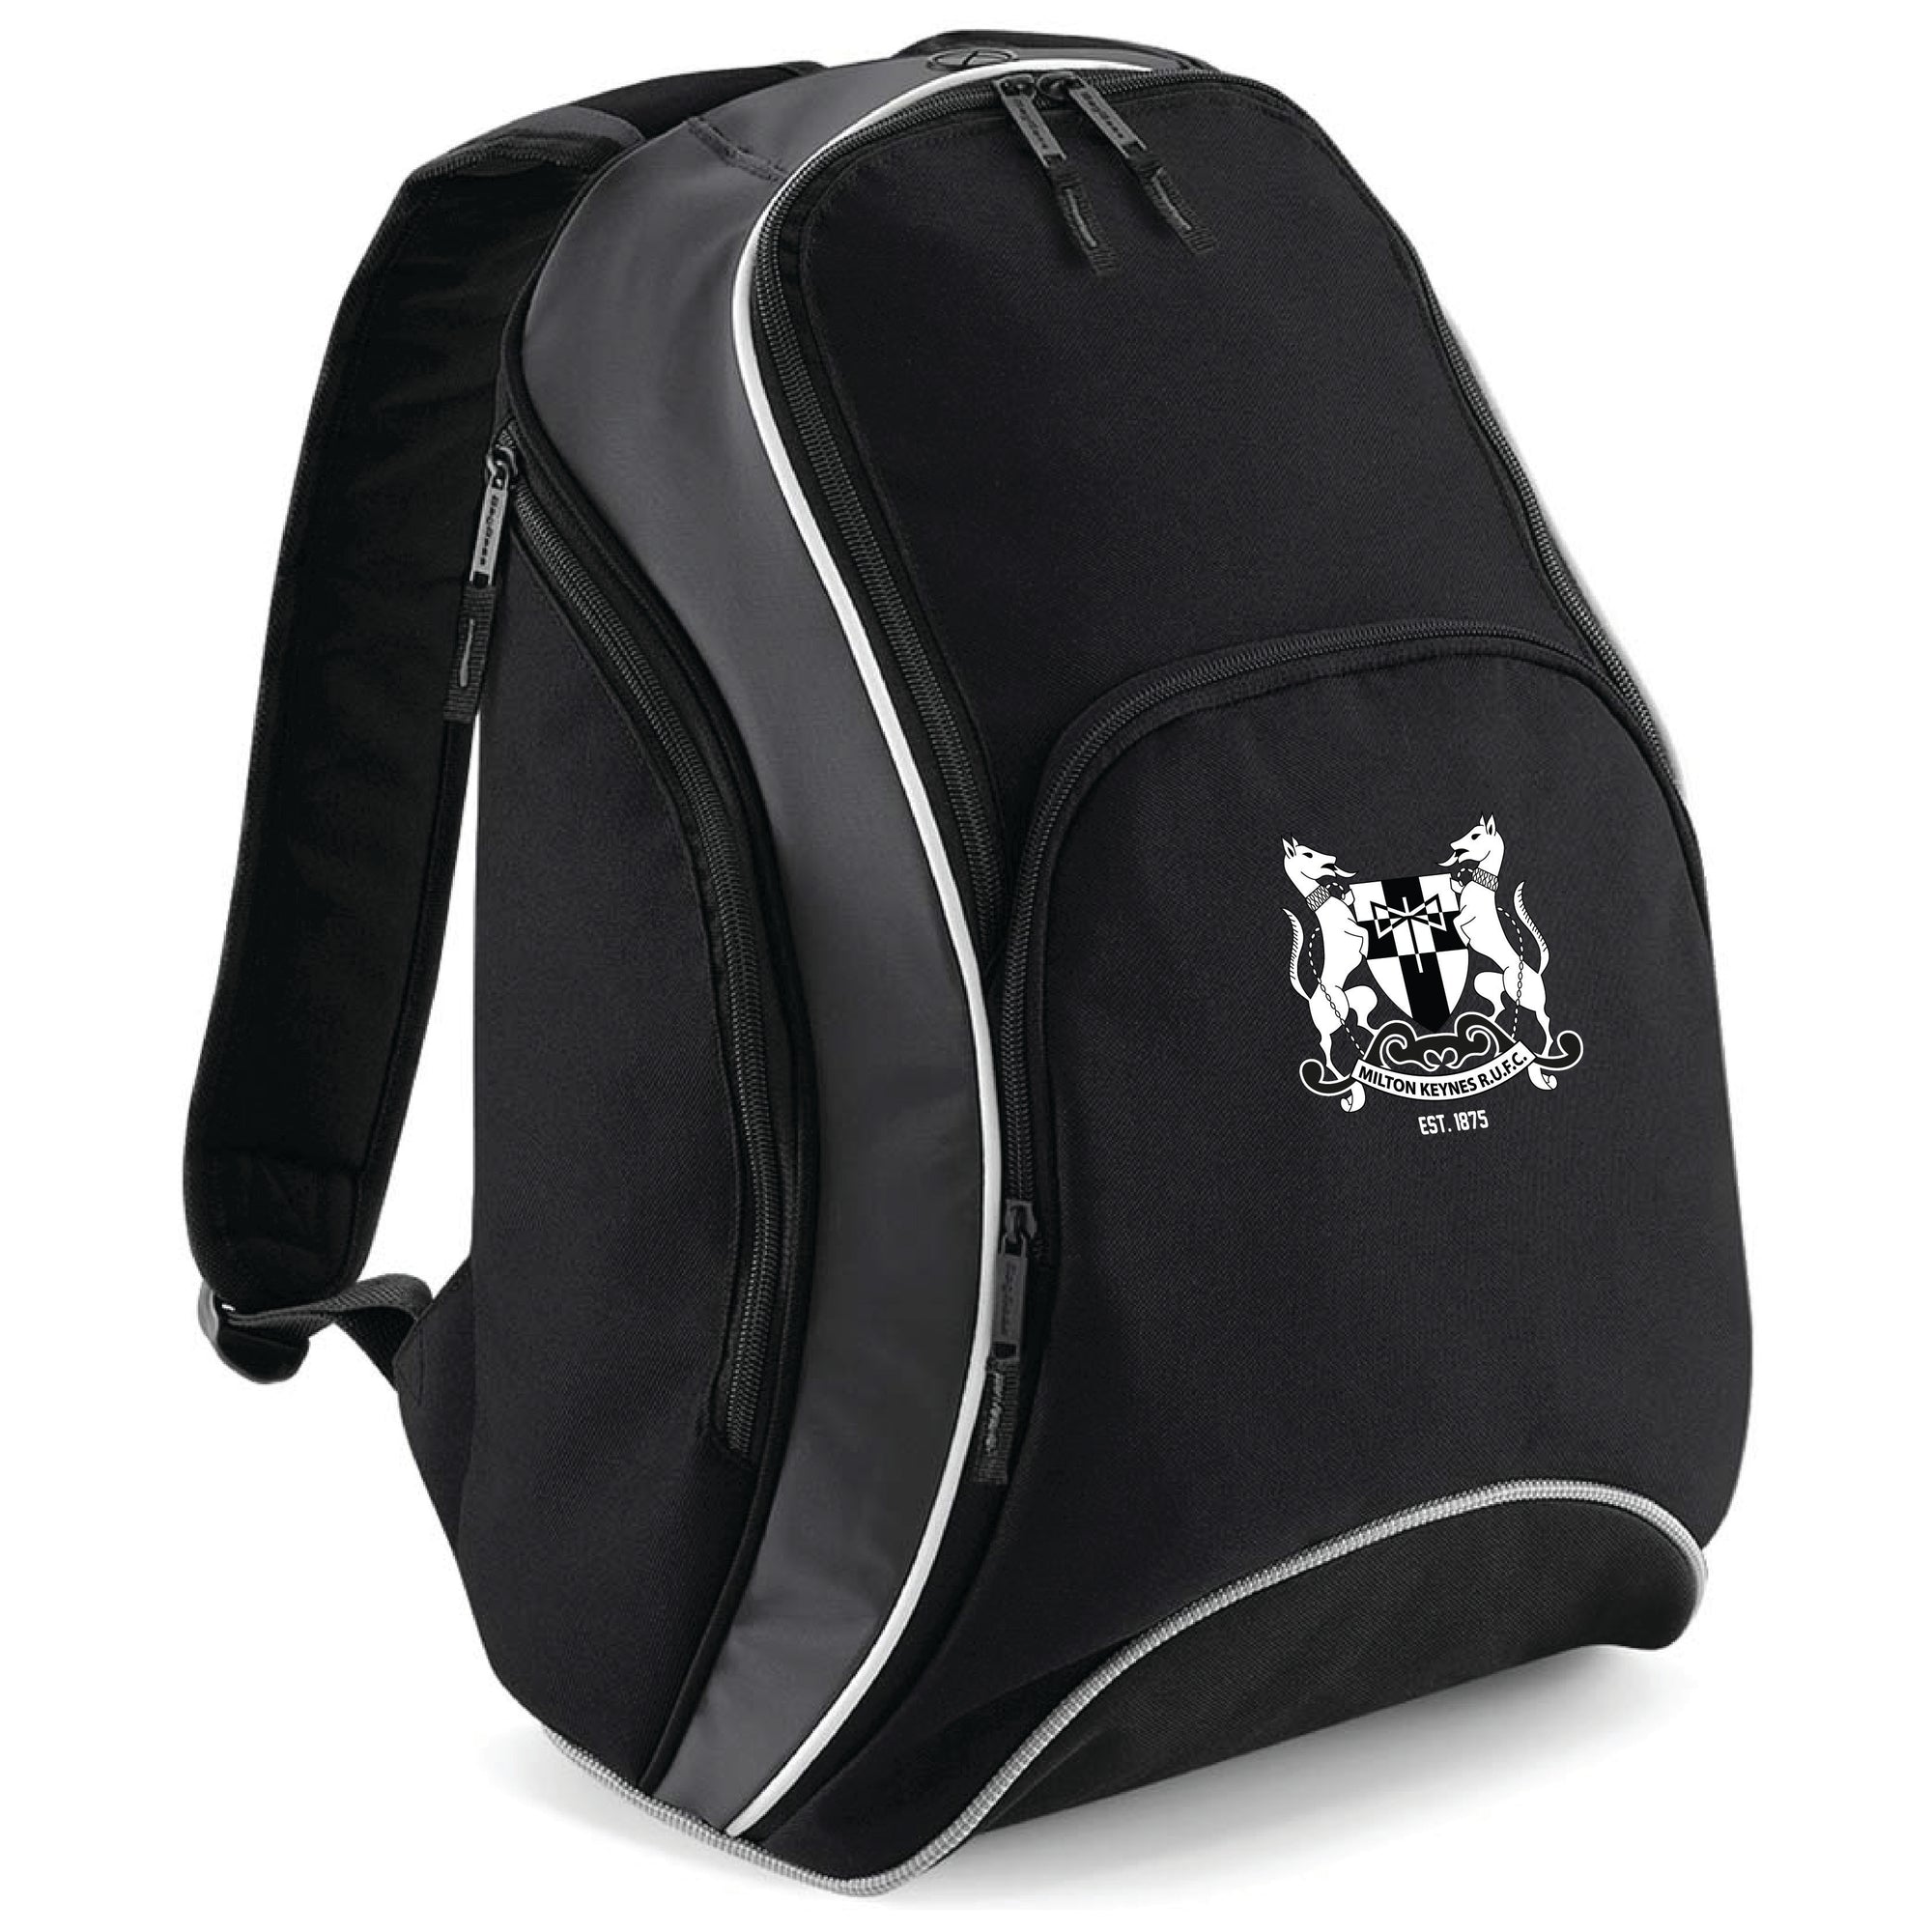 MKRUFC Team Backpack - Black/graphite